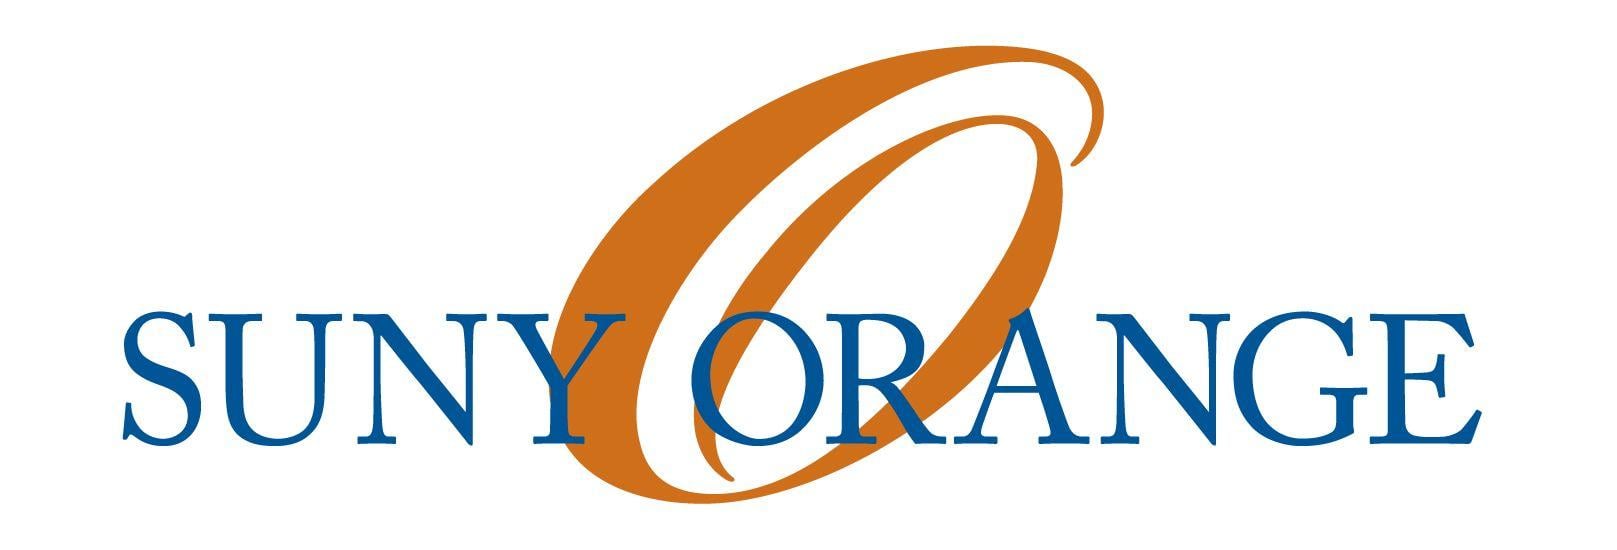 SUNY Orange Logo - SUNY Orange: Media Guide & Publicity Guidelines